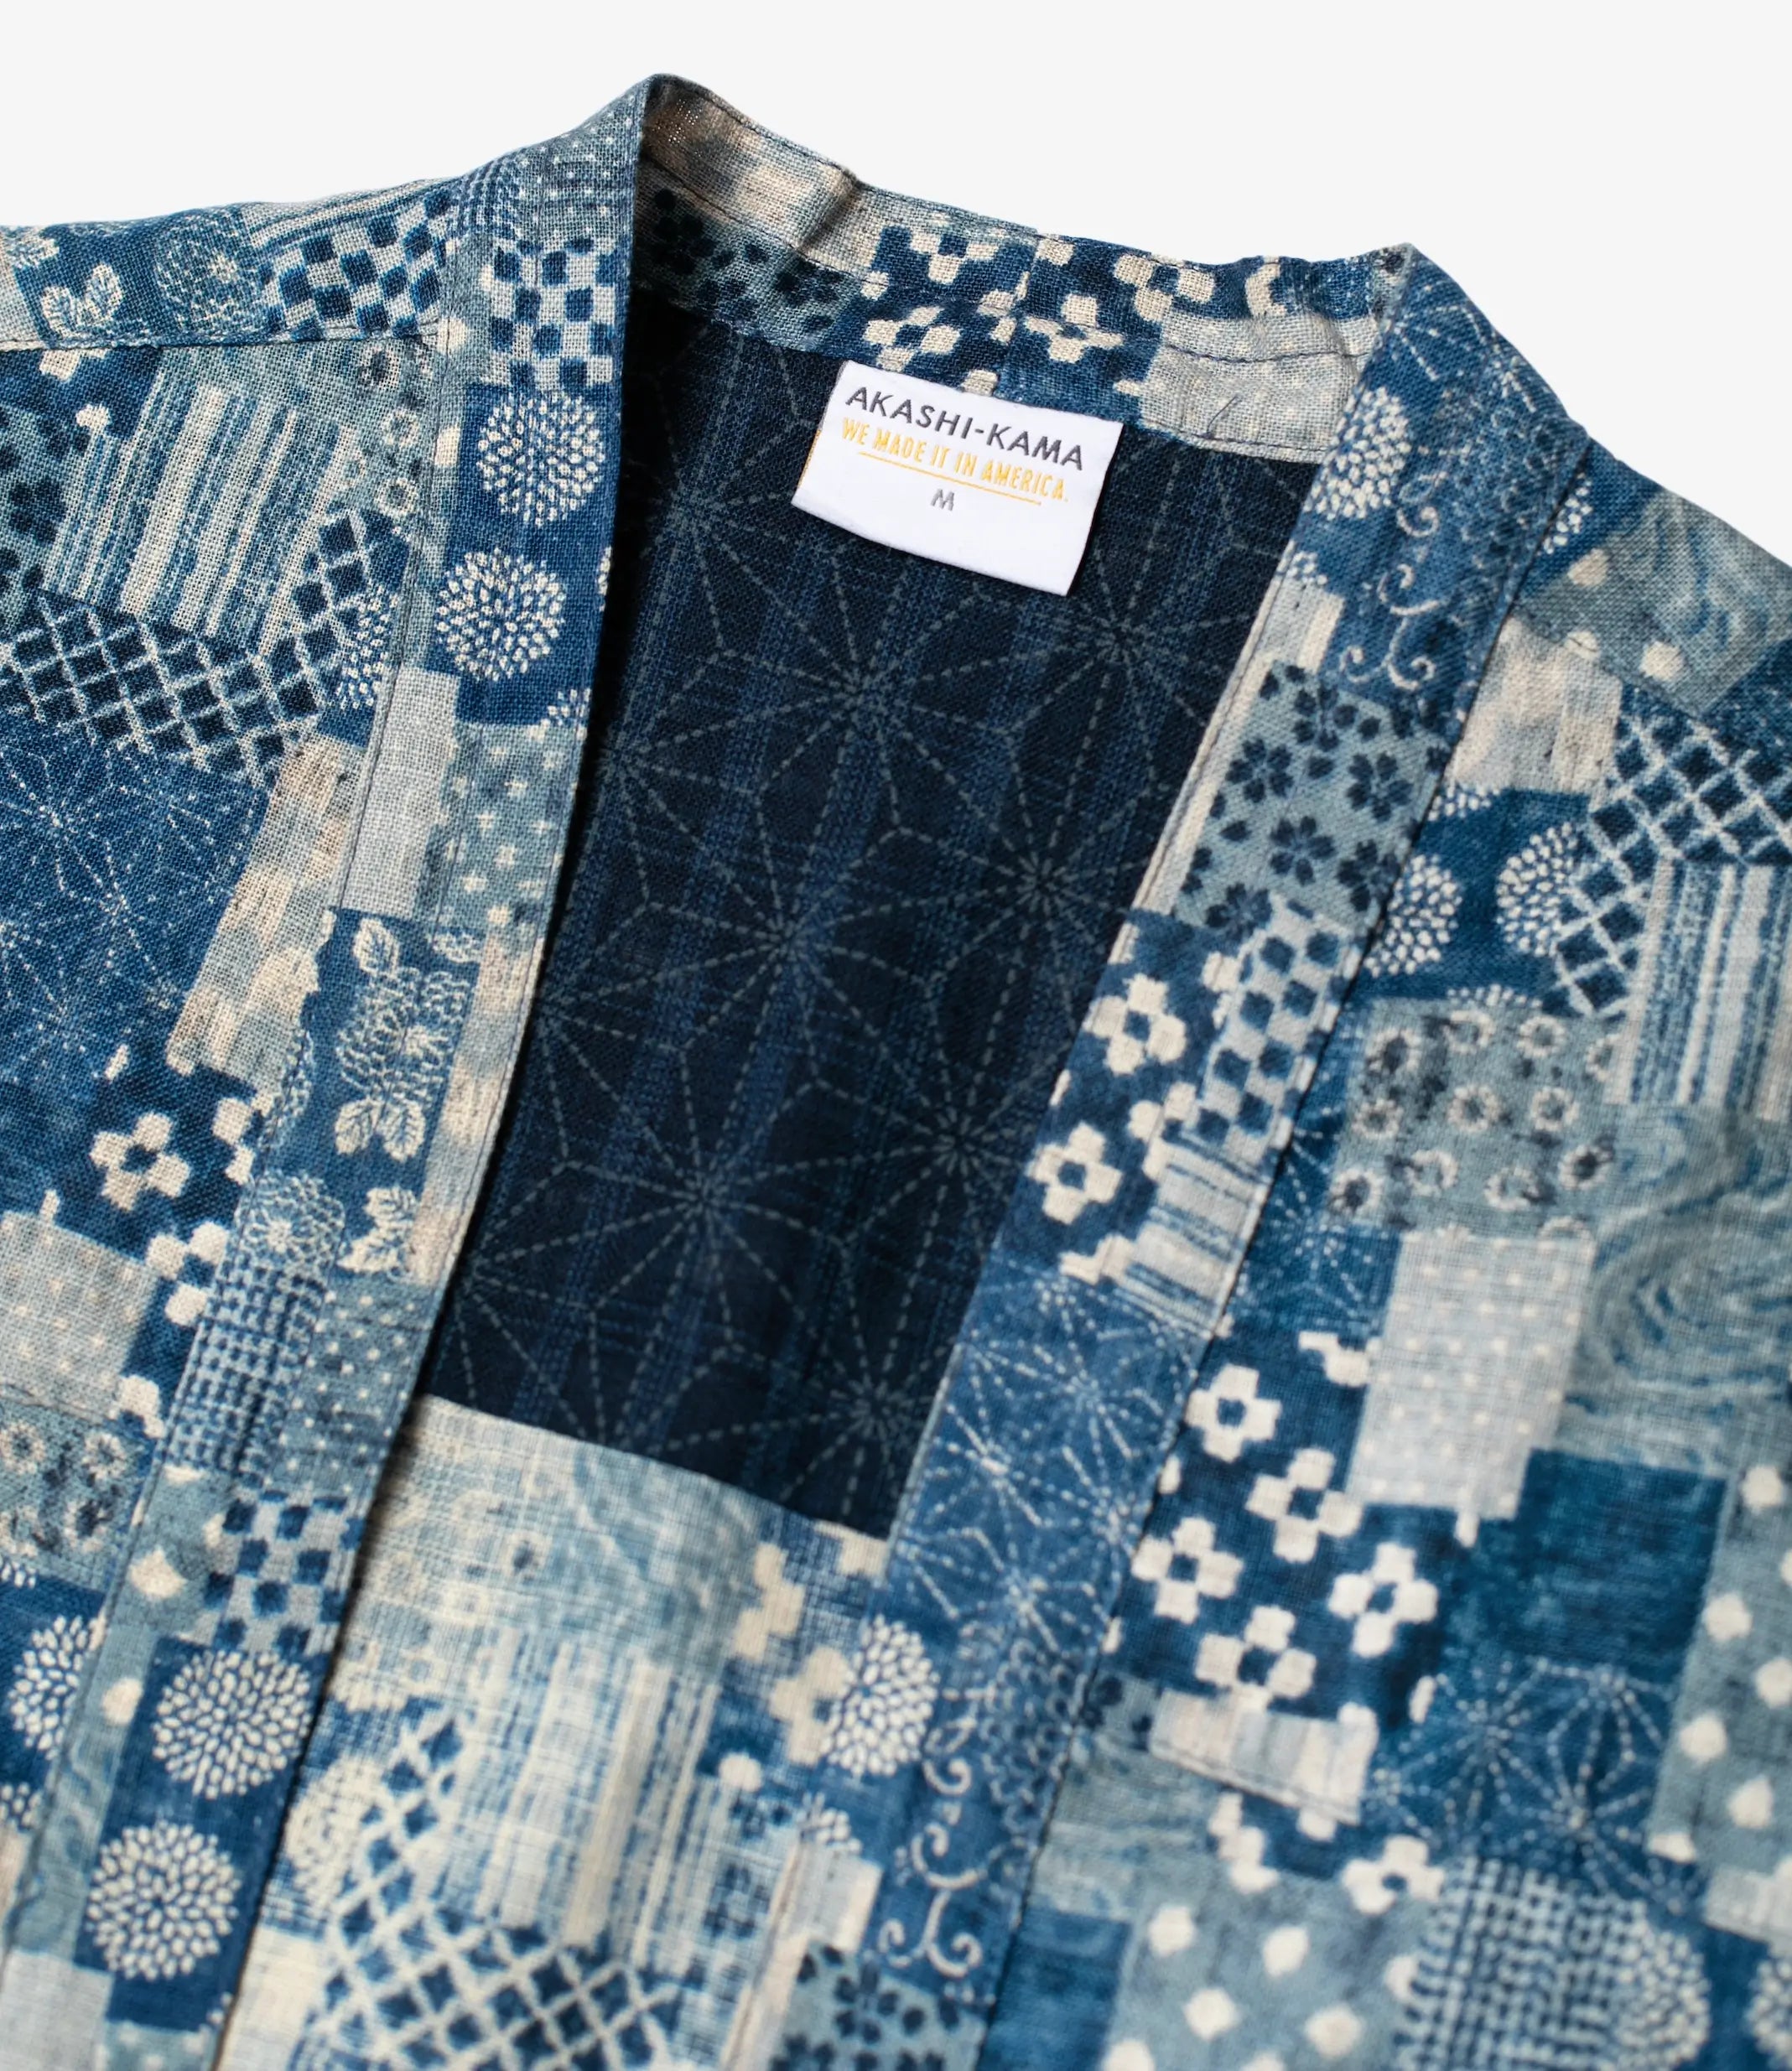 Boro Print Noragi Jacket Style | Kimono Shirt Japanese AKASHI-KAMA Streetwear 